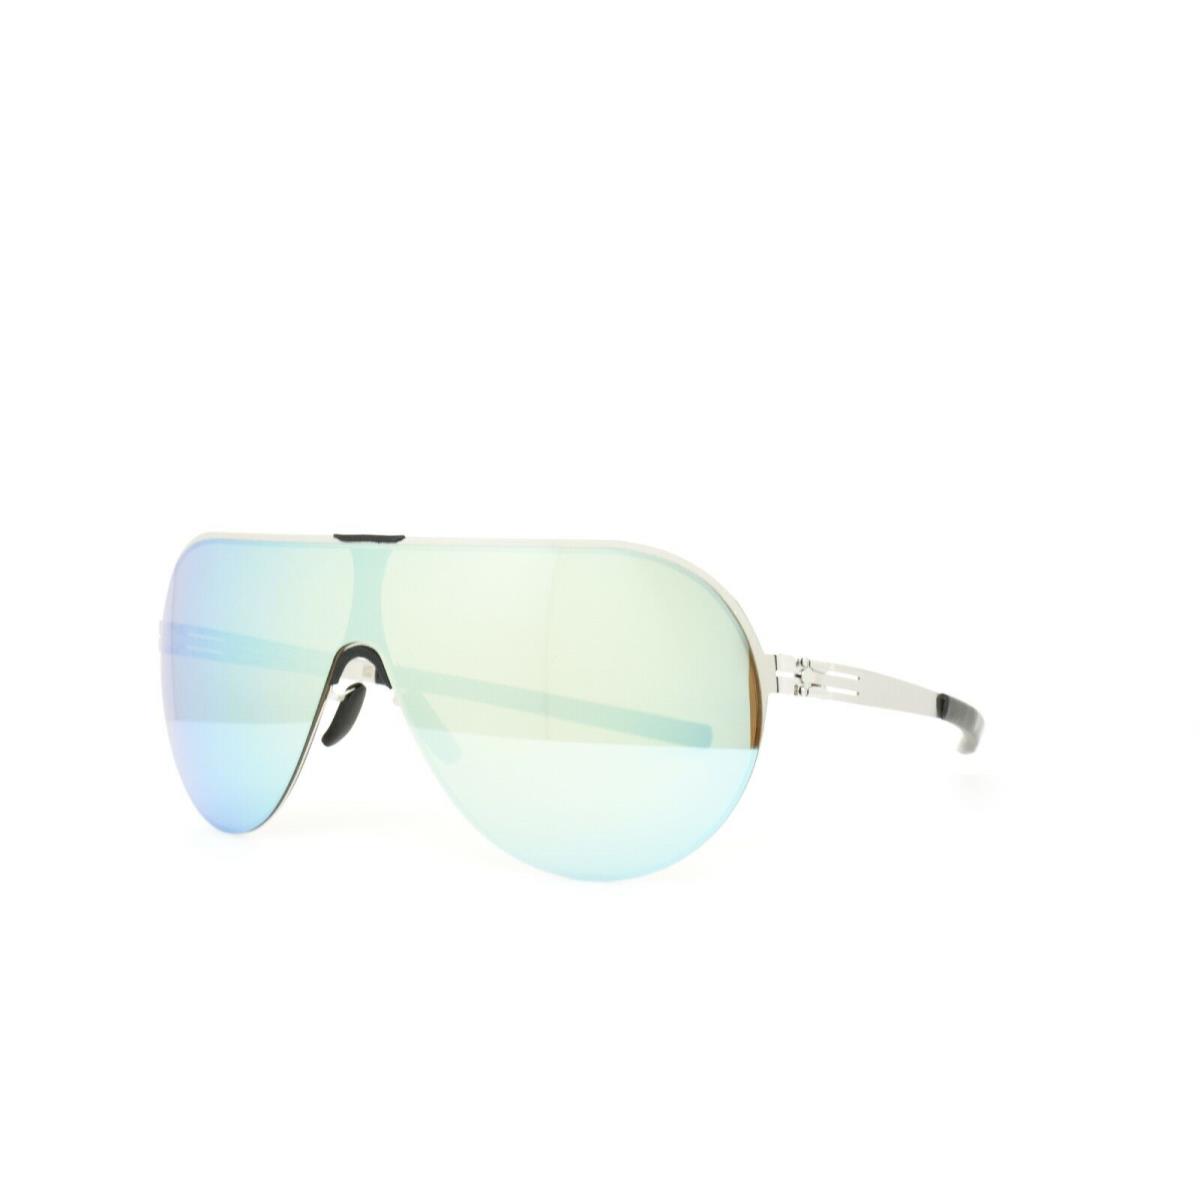 iC Berlin Sunglasses Panorama Chrome Black 138-0-145